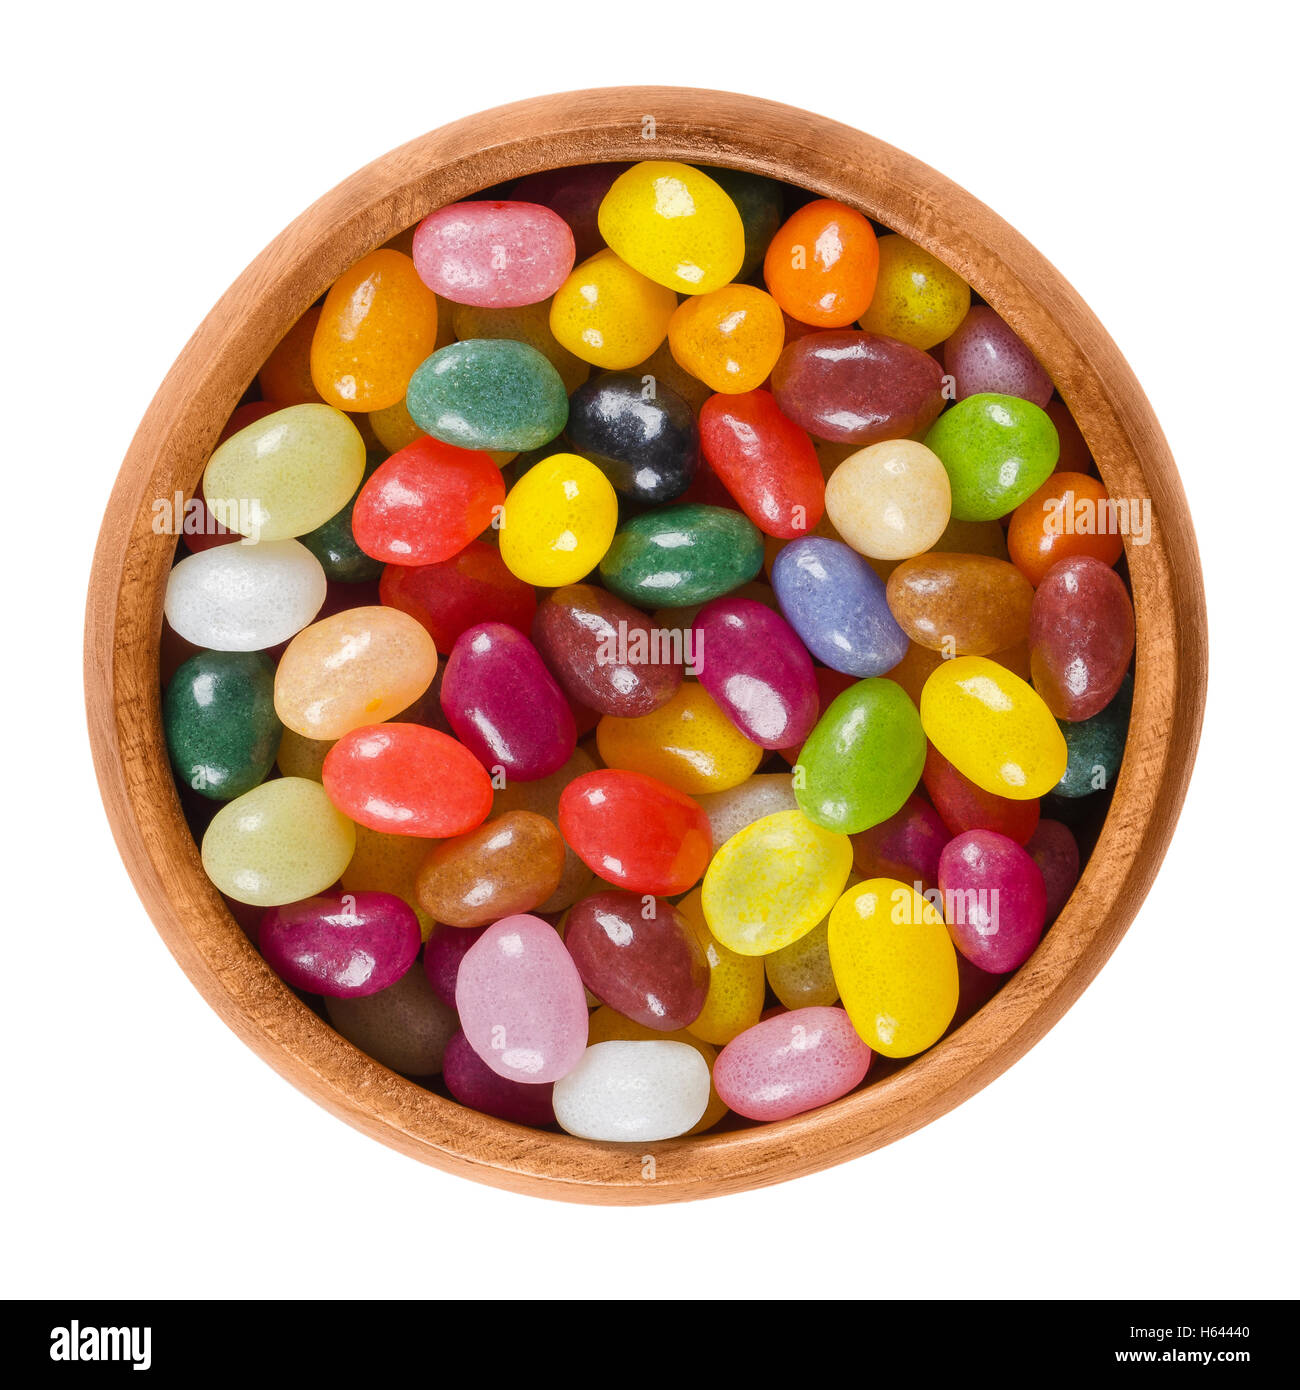 Jelly Beans en el tazón de madera sobre fondo blanco. Surtido de pequeños dulces de azúcar en forma de frijol en diferentes colores con caramelo blando. Foto de stock